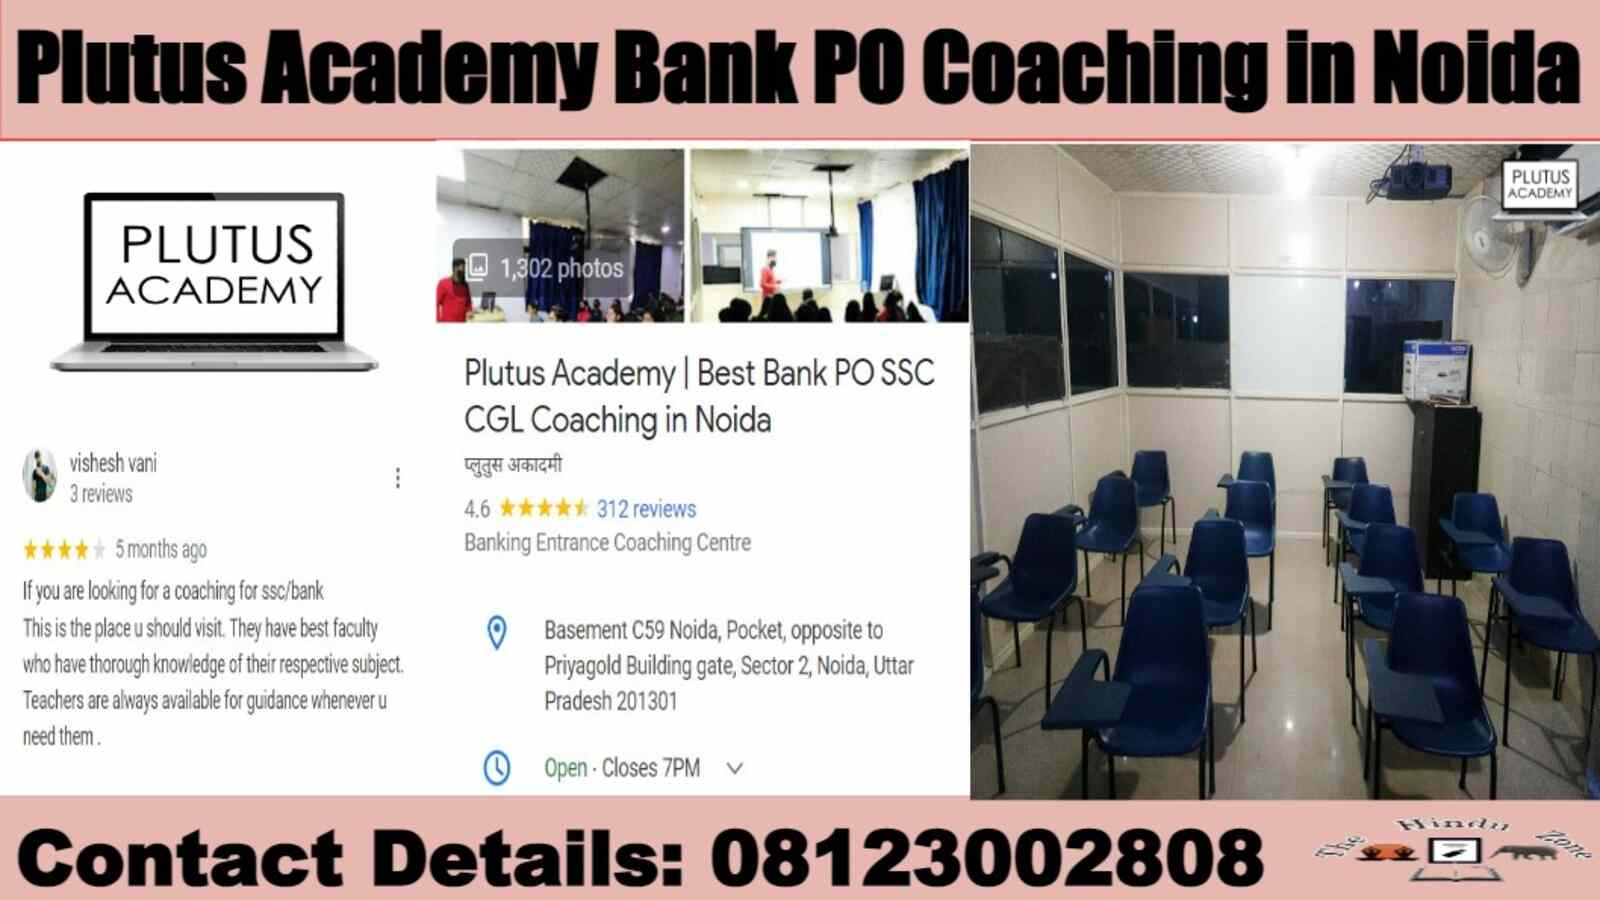 Plutus Academy Bank PO Coaching in Noida (1)